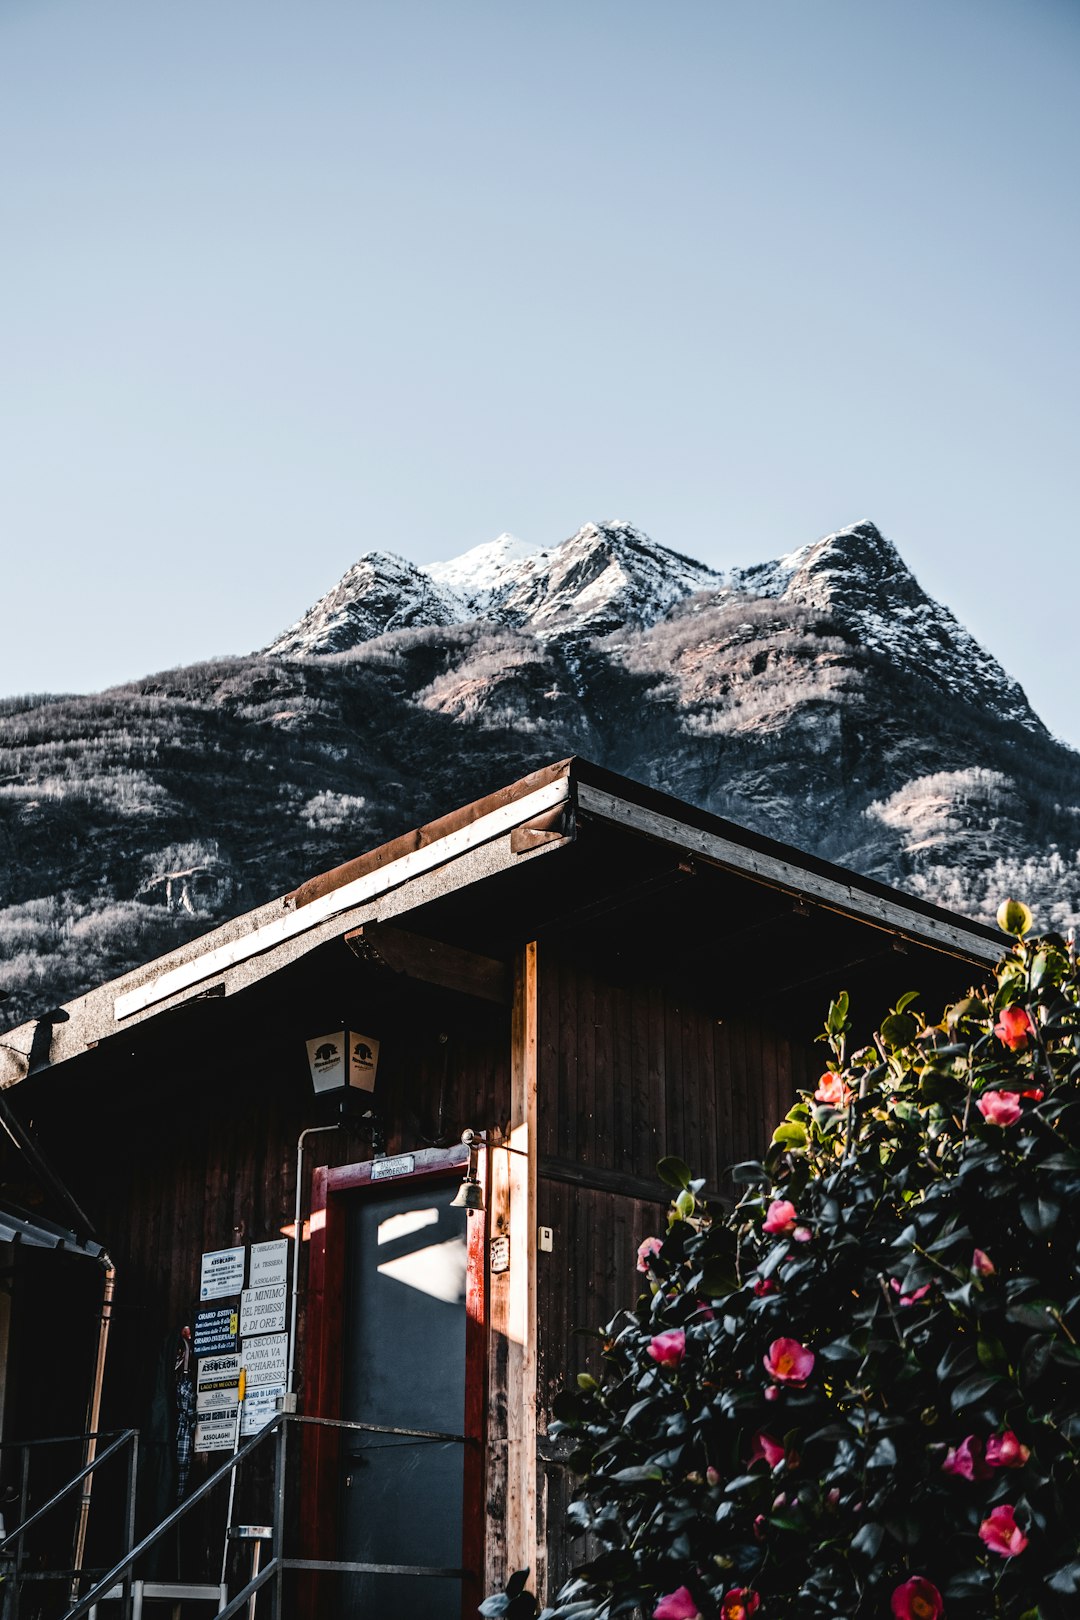 Hill station photo spot Villadossola Aosta